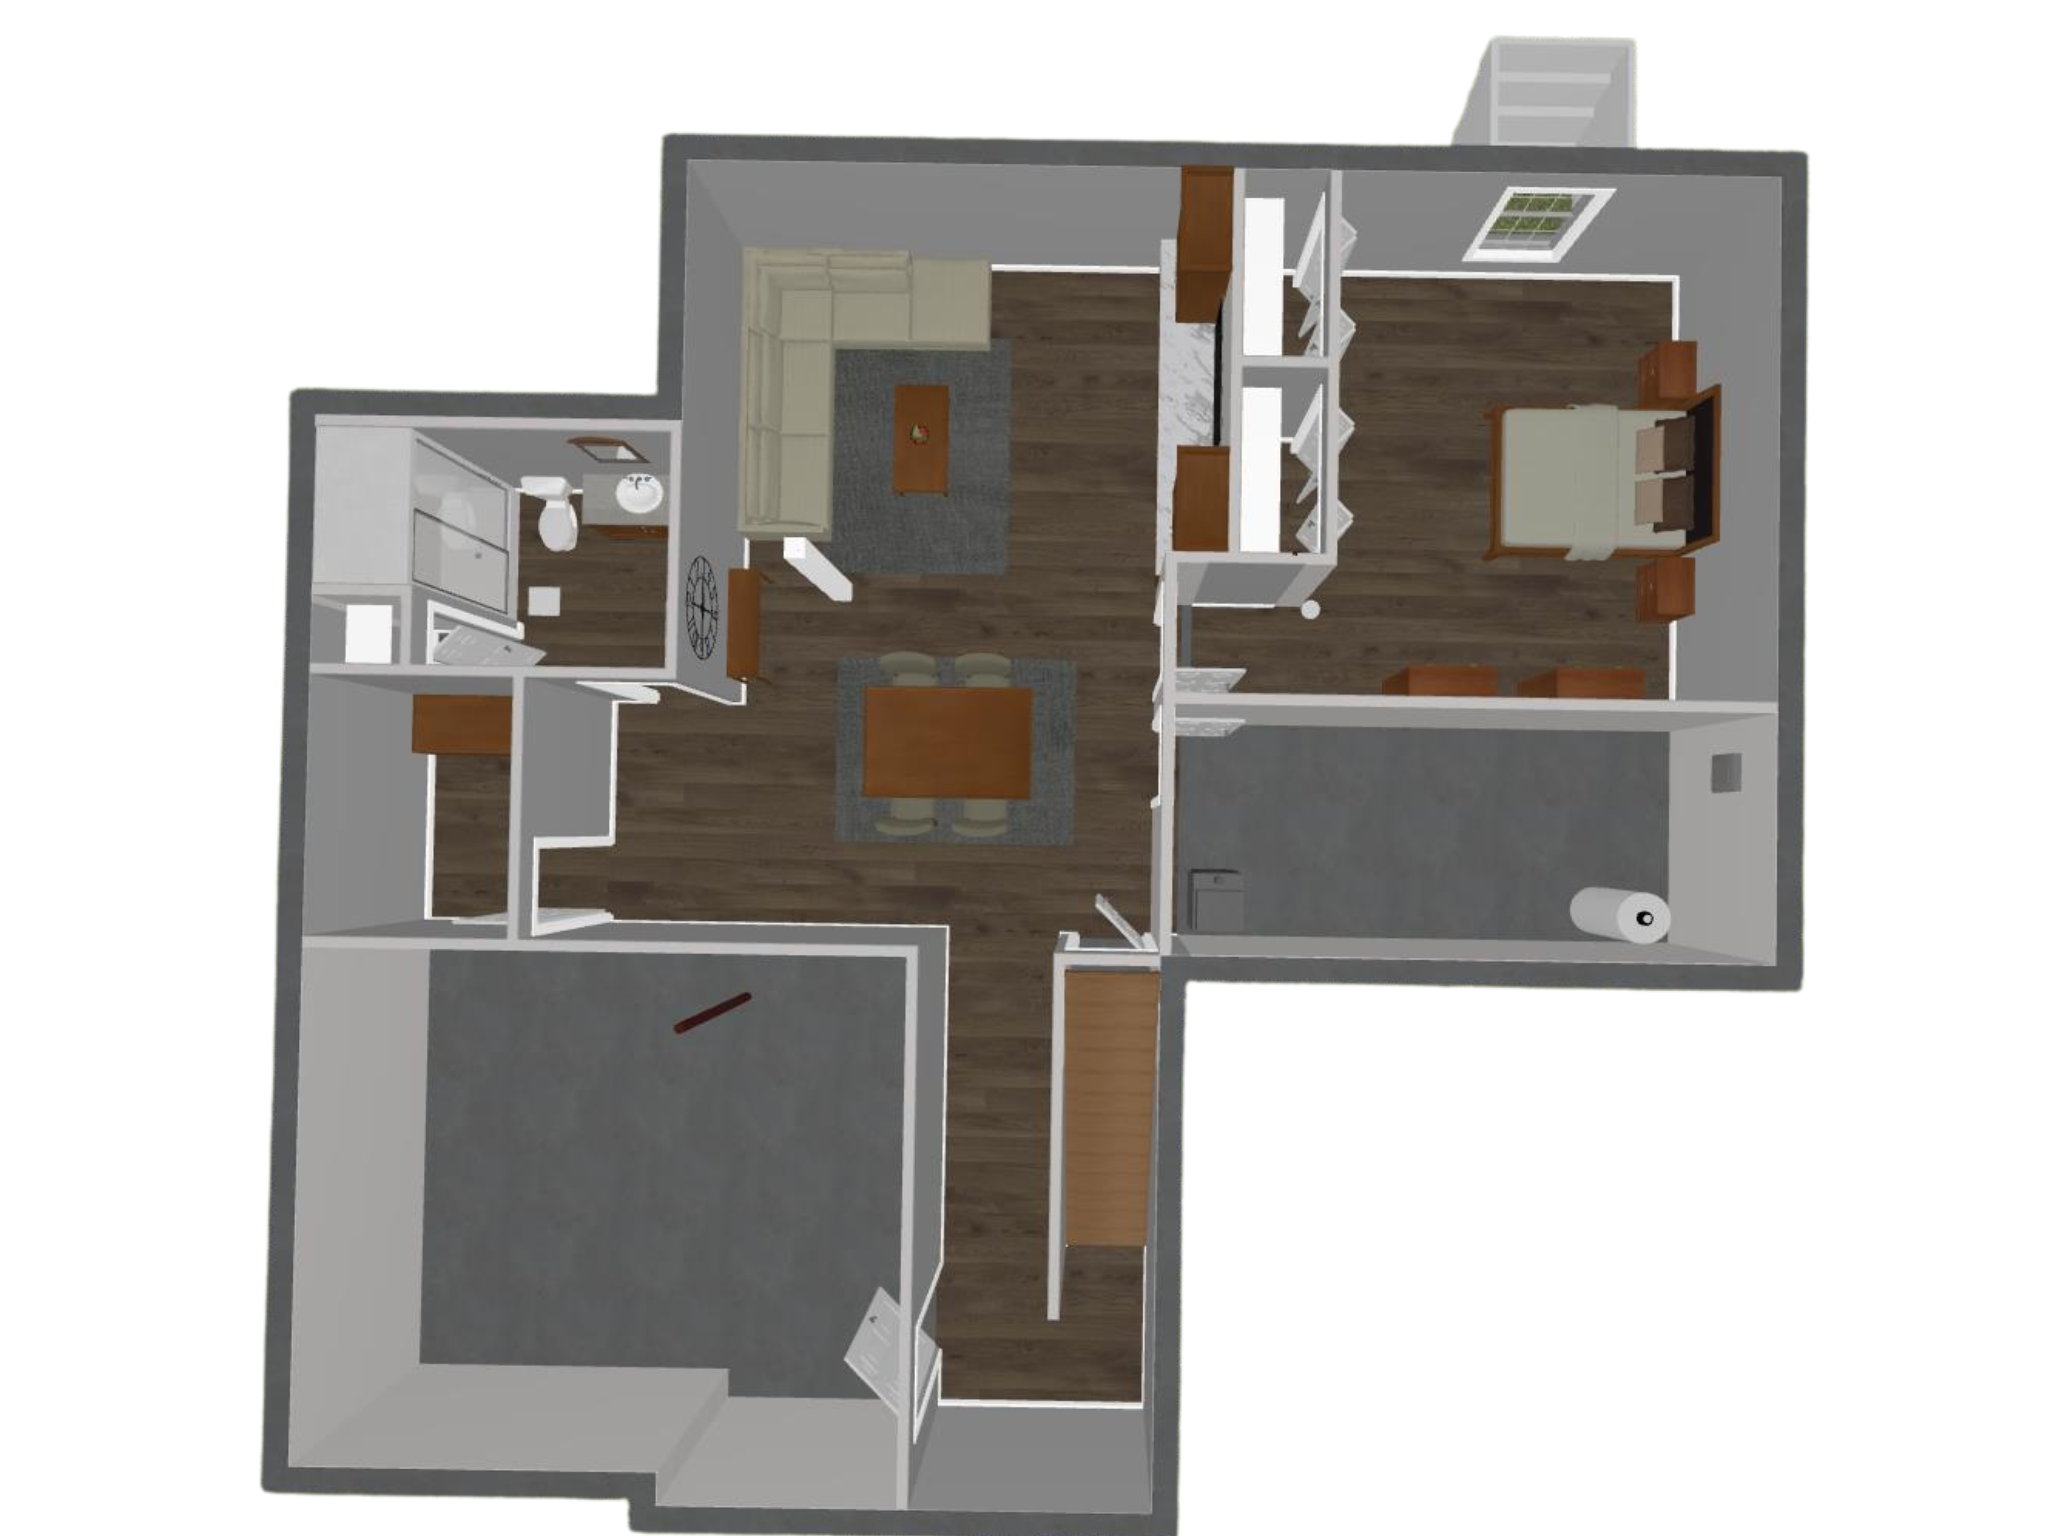 Design rendering of floor plan of Manheim Basement remodel